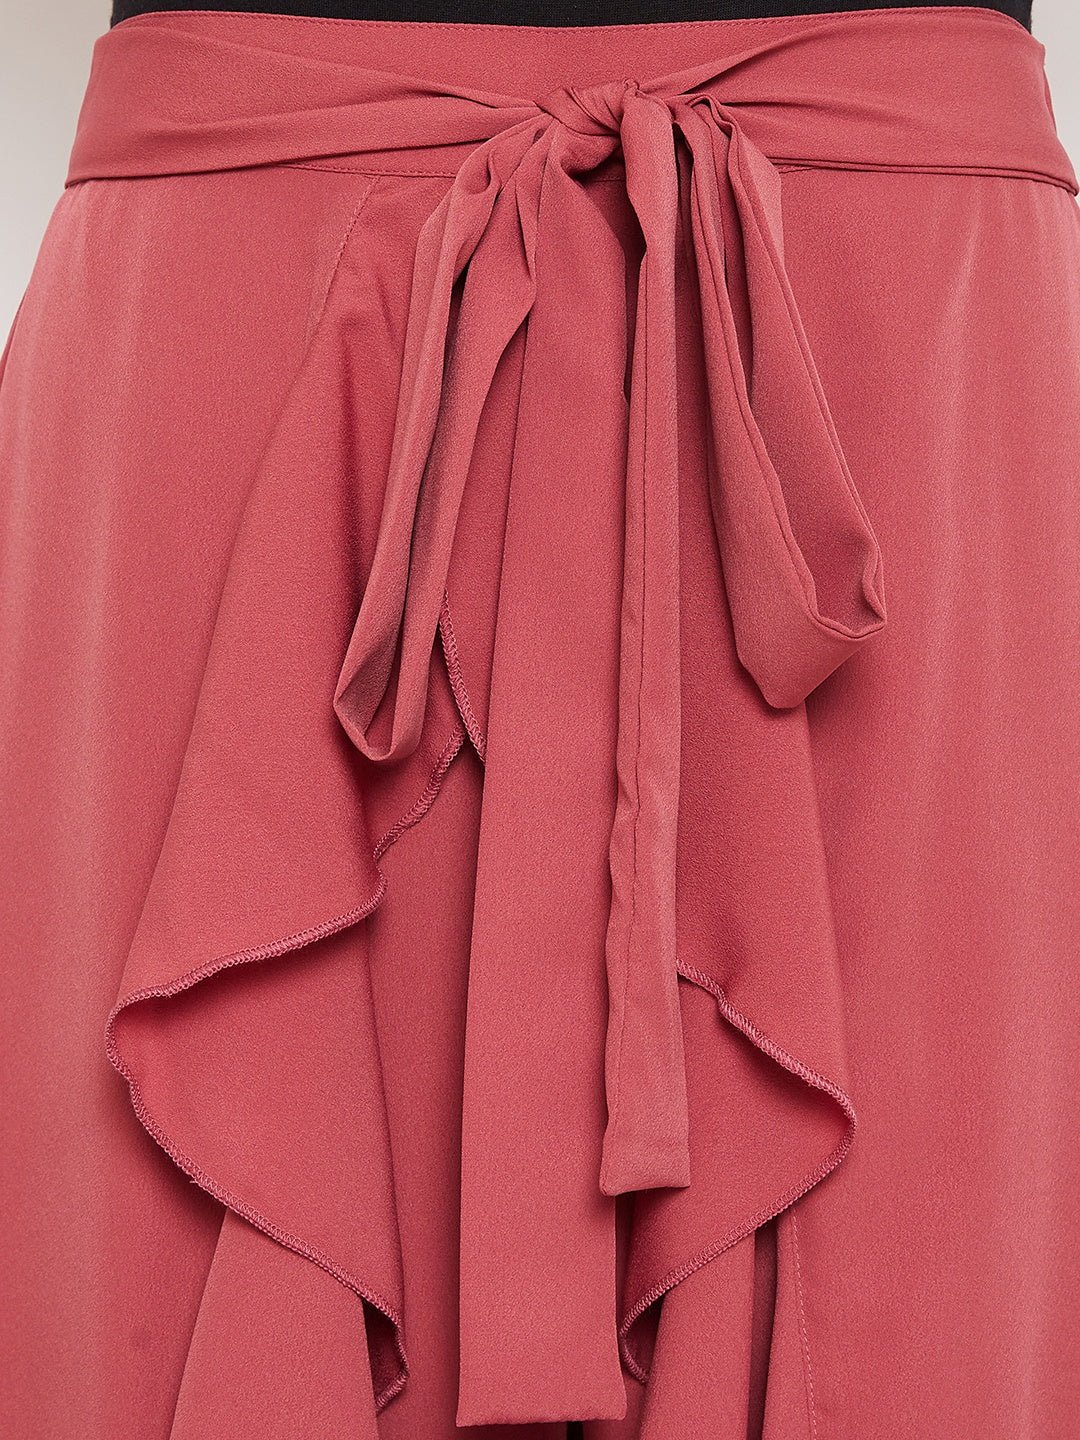 Zara Trafaluc Navy Wrap Skirted Cropped Trousers Crop Pants w Skirt Overlay  XS | eBay